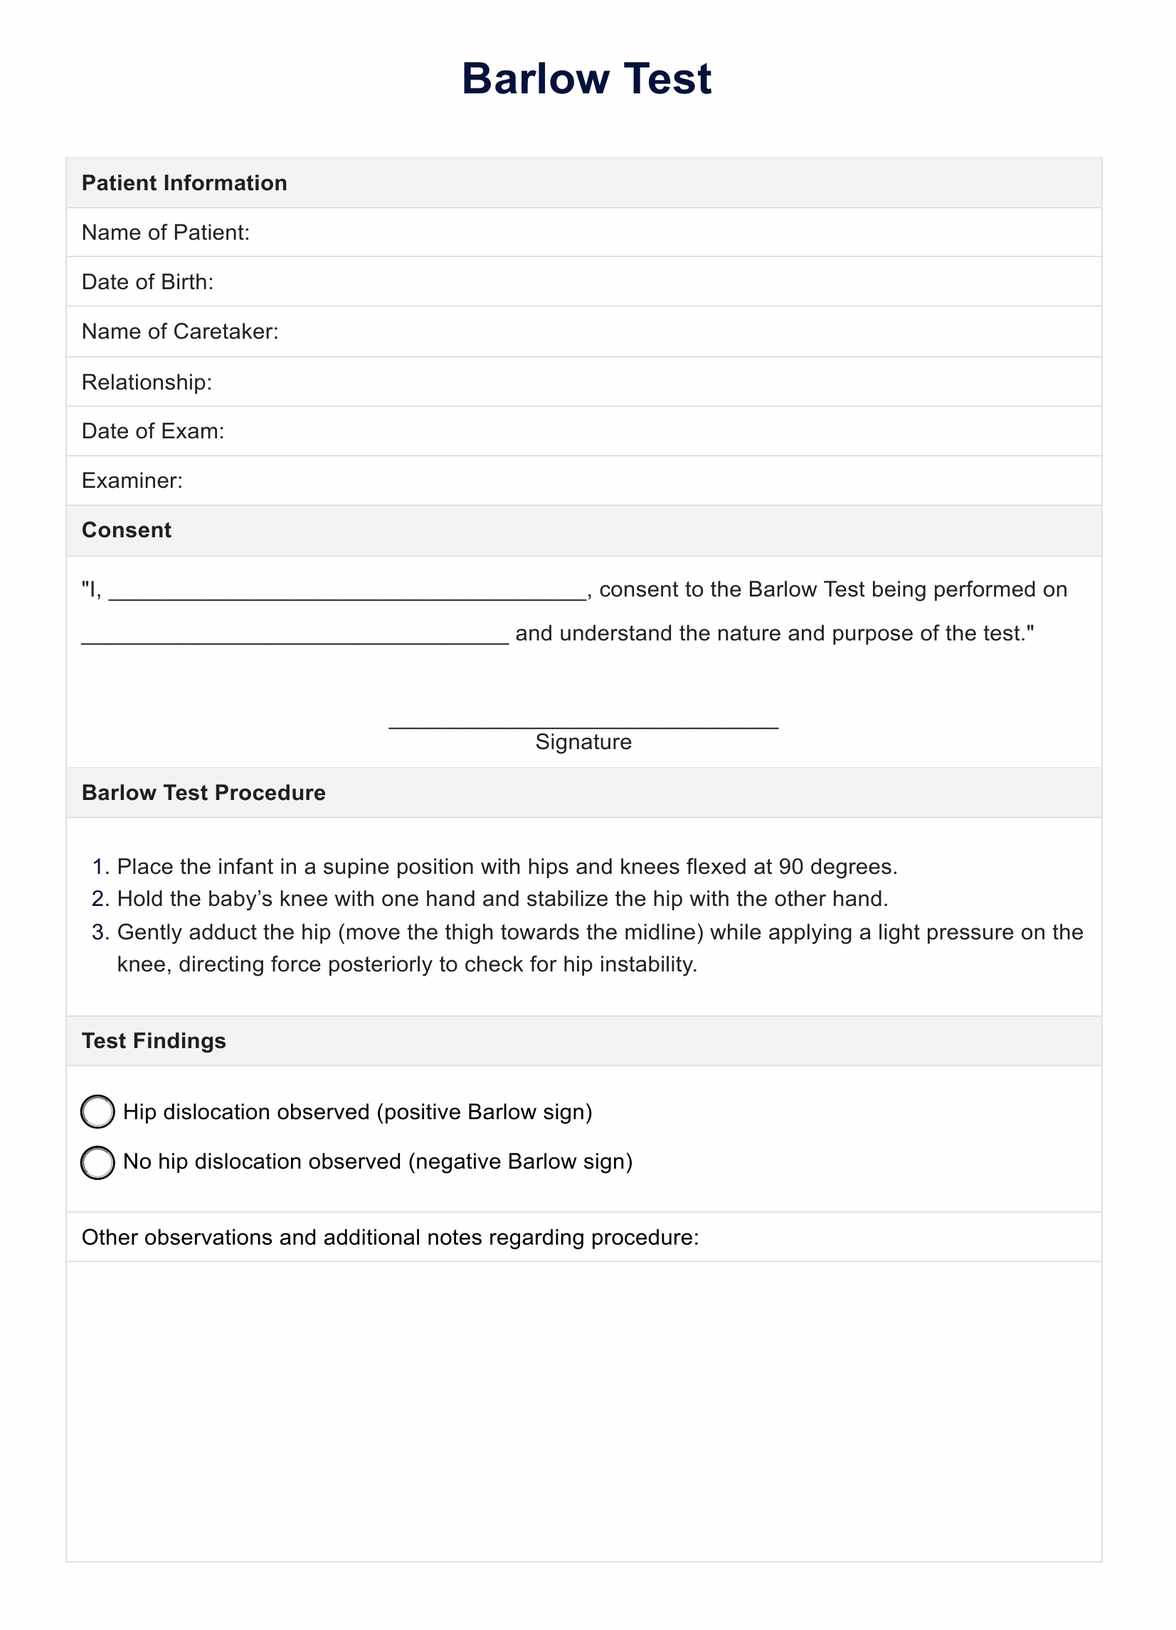 Barlow Test PDF Example